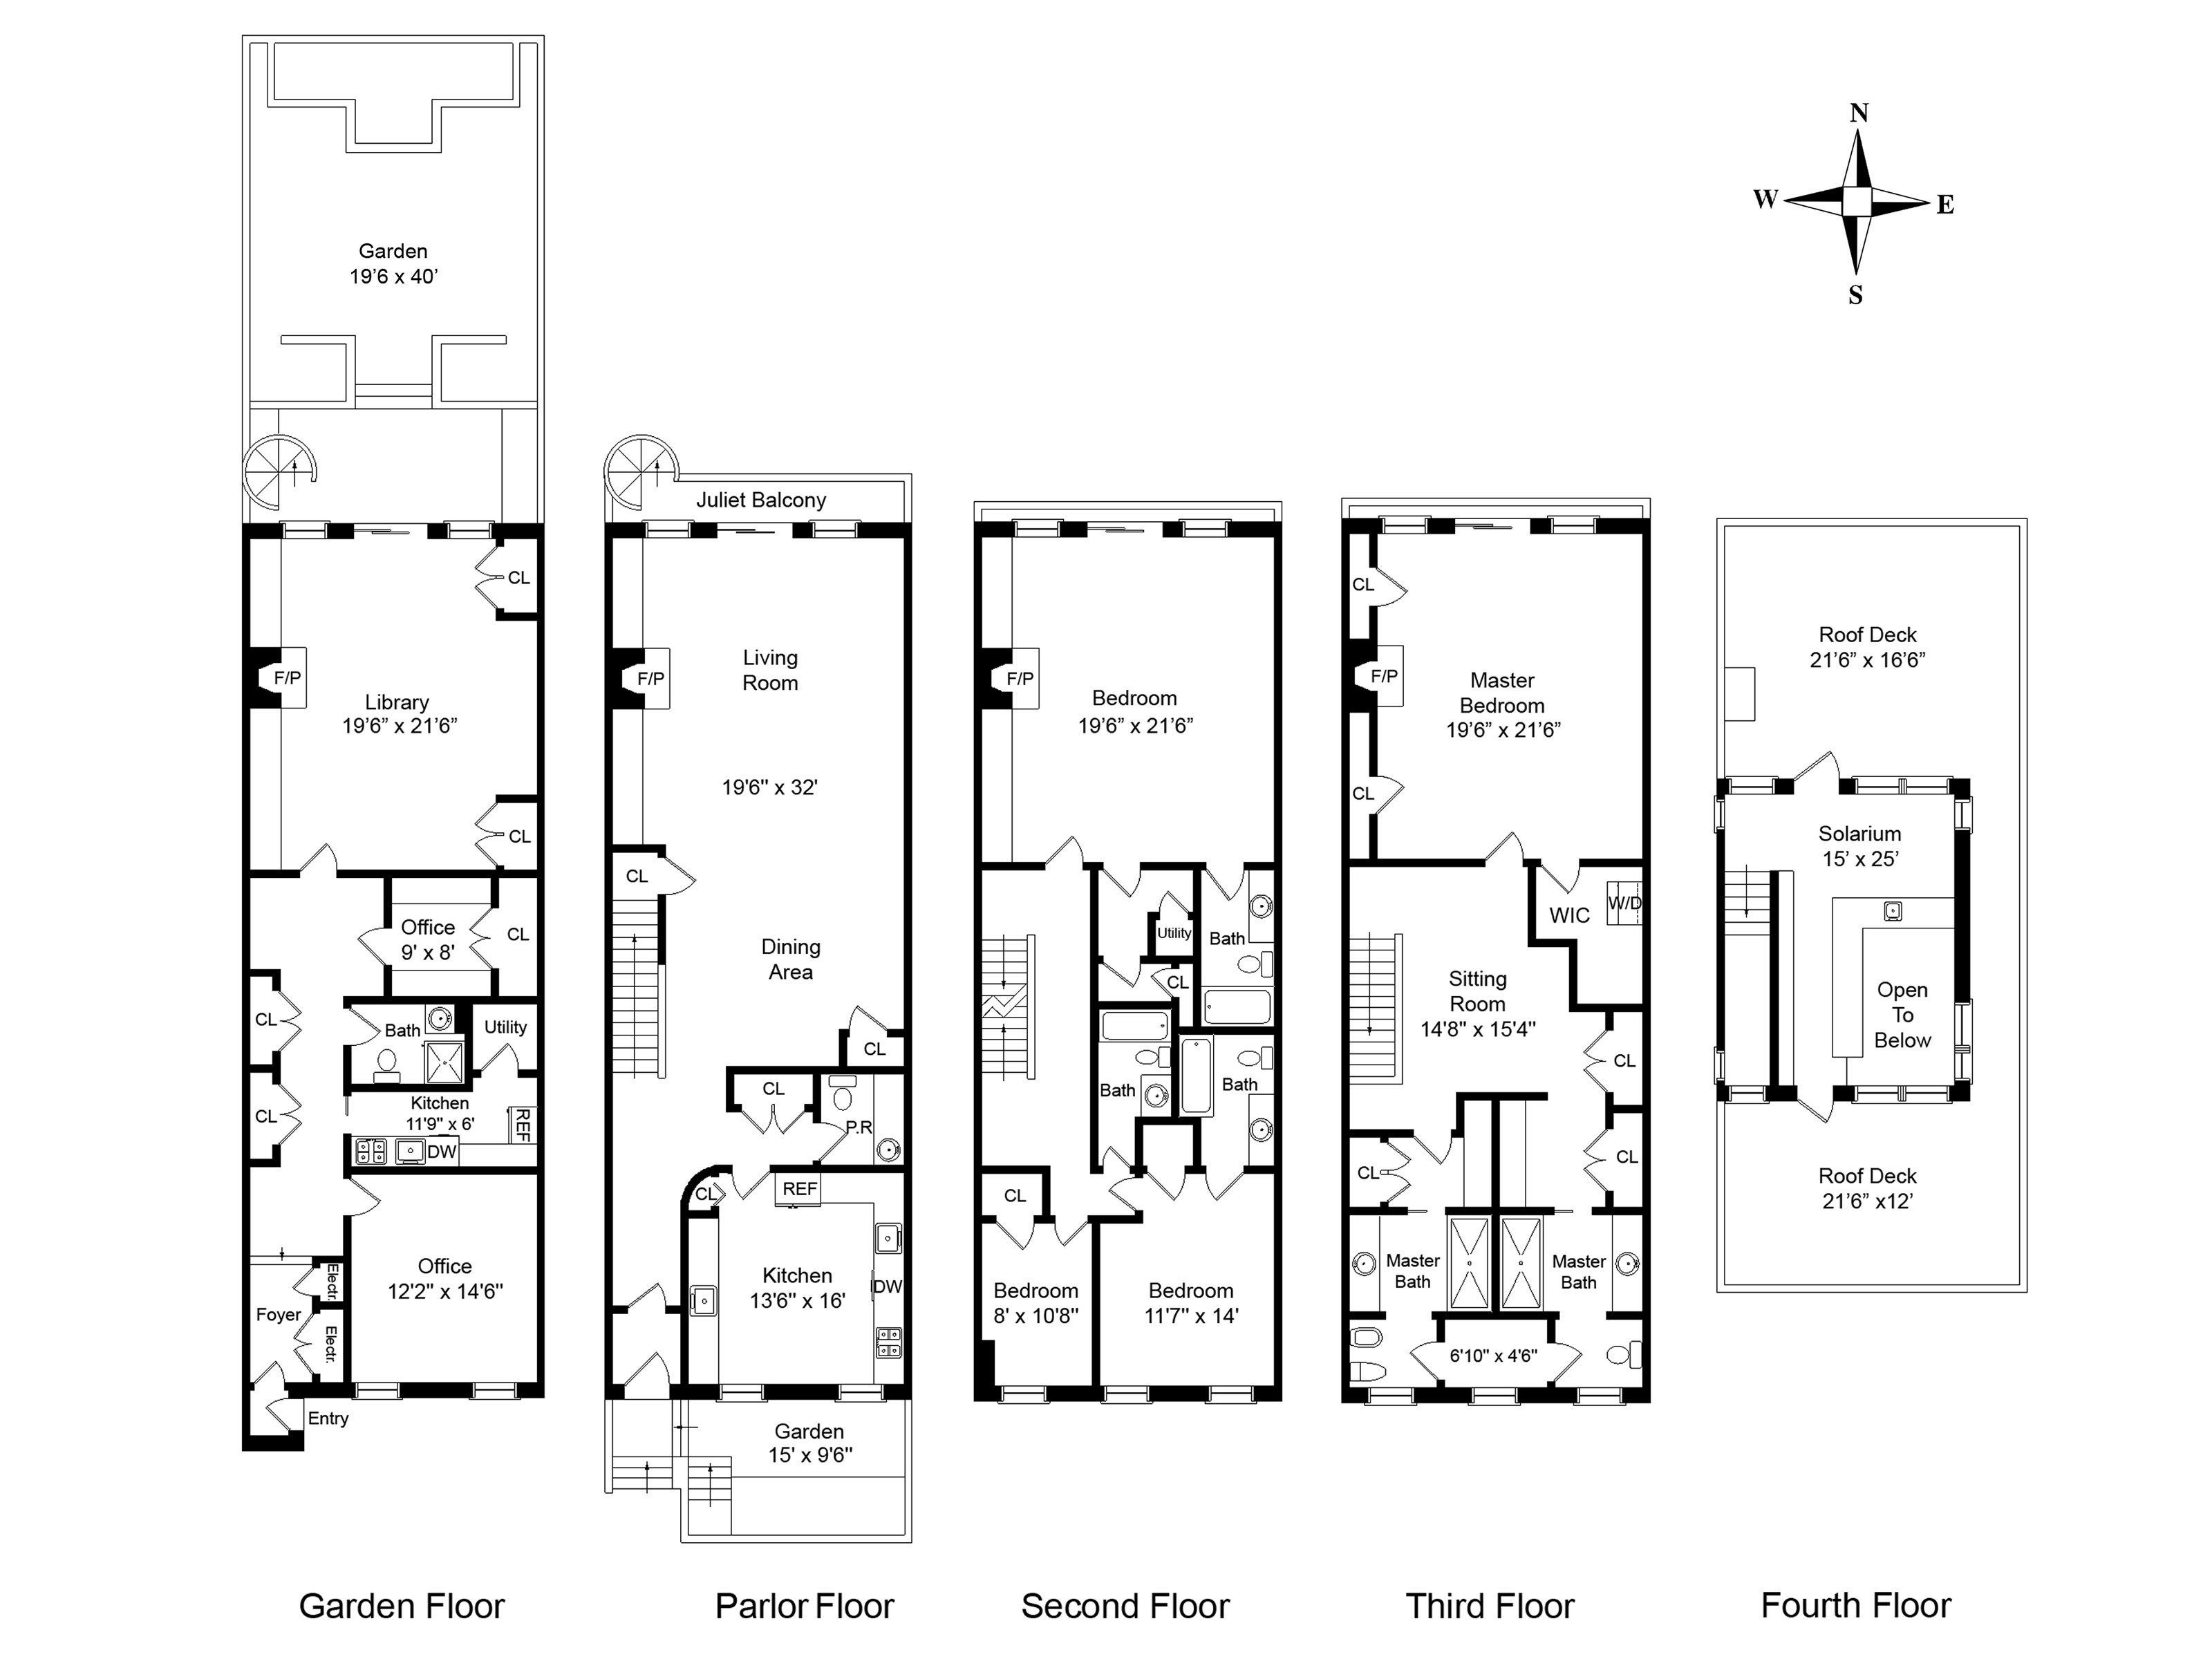 New York Townhouse Floor Plans House Plans Pinterest